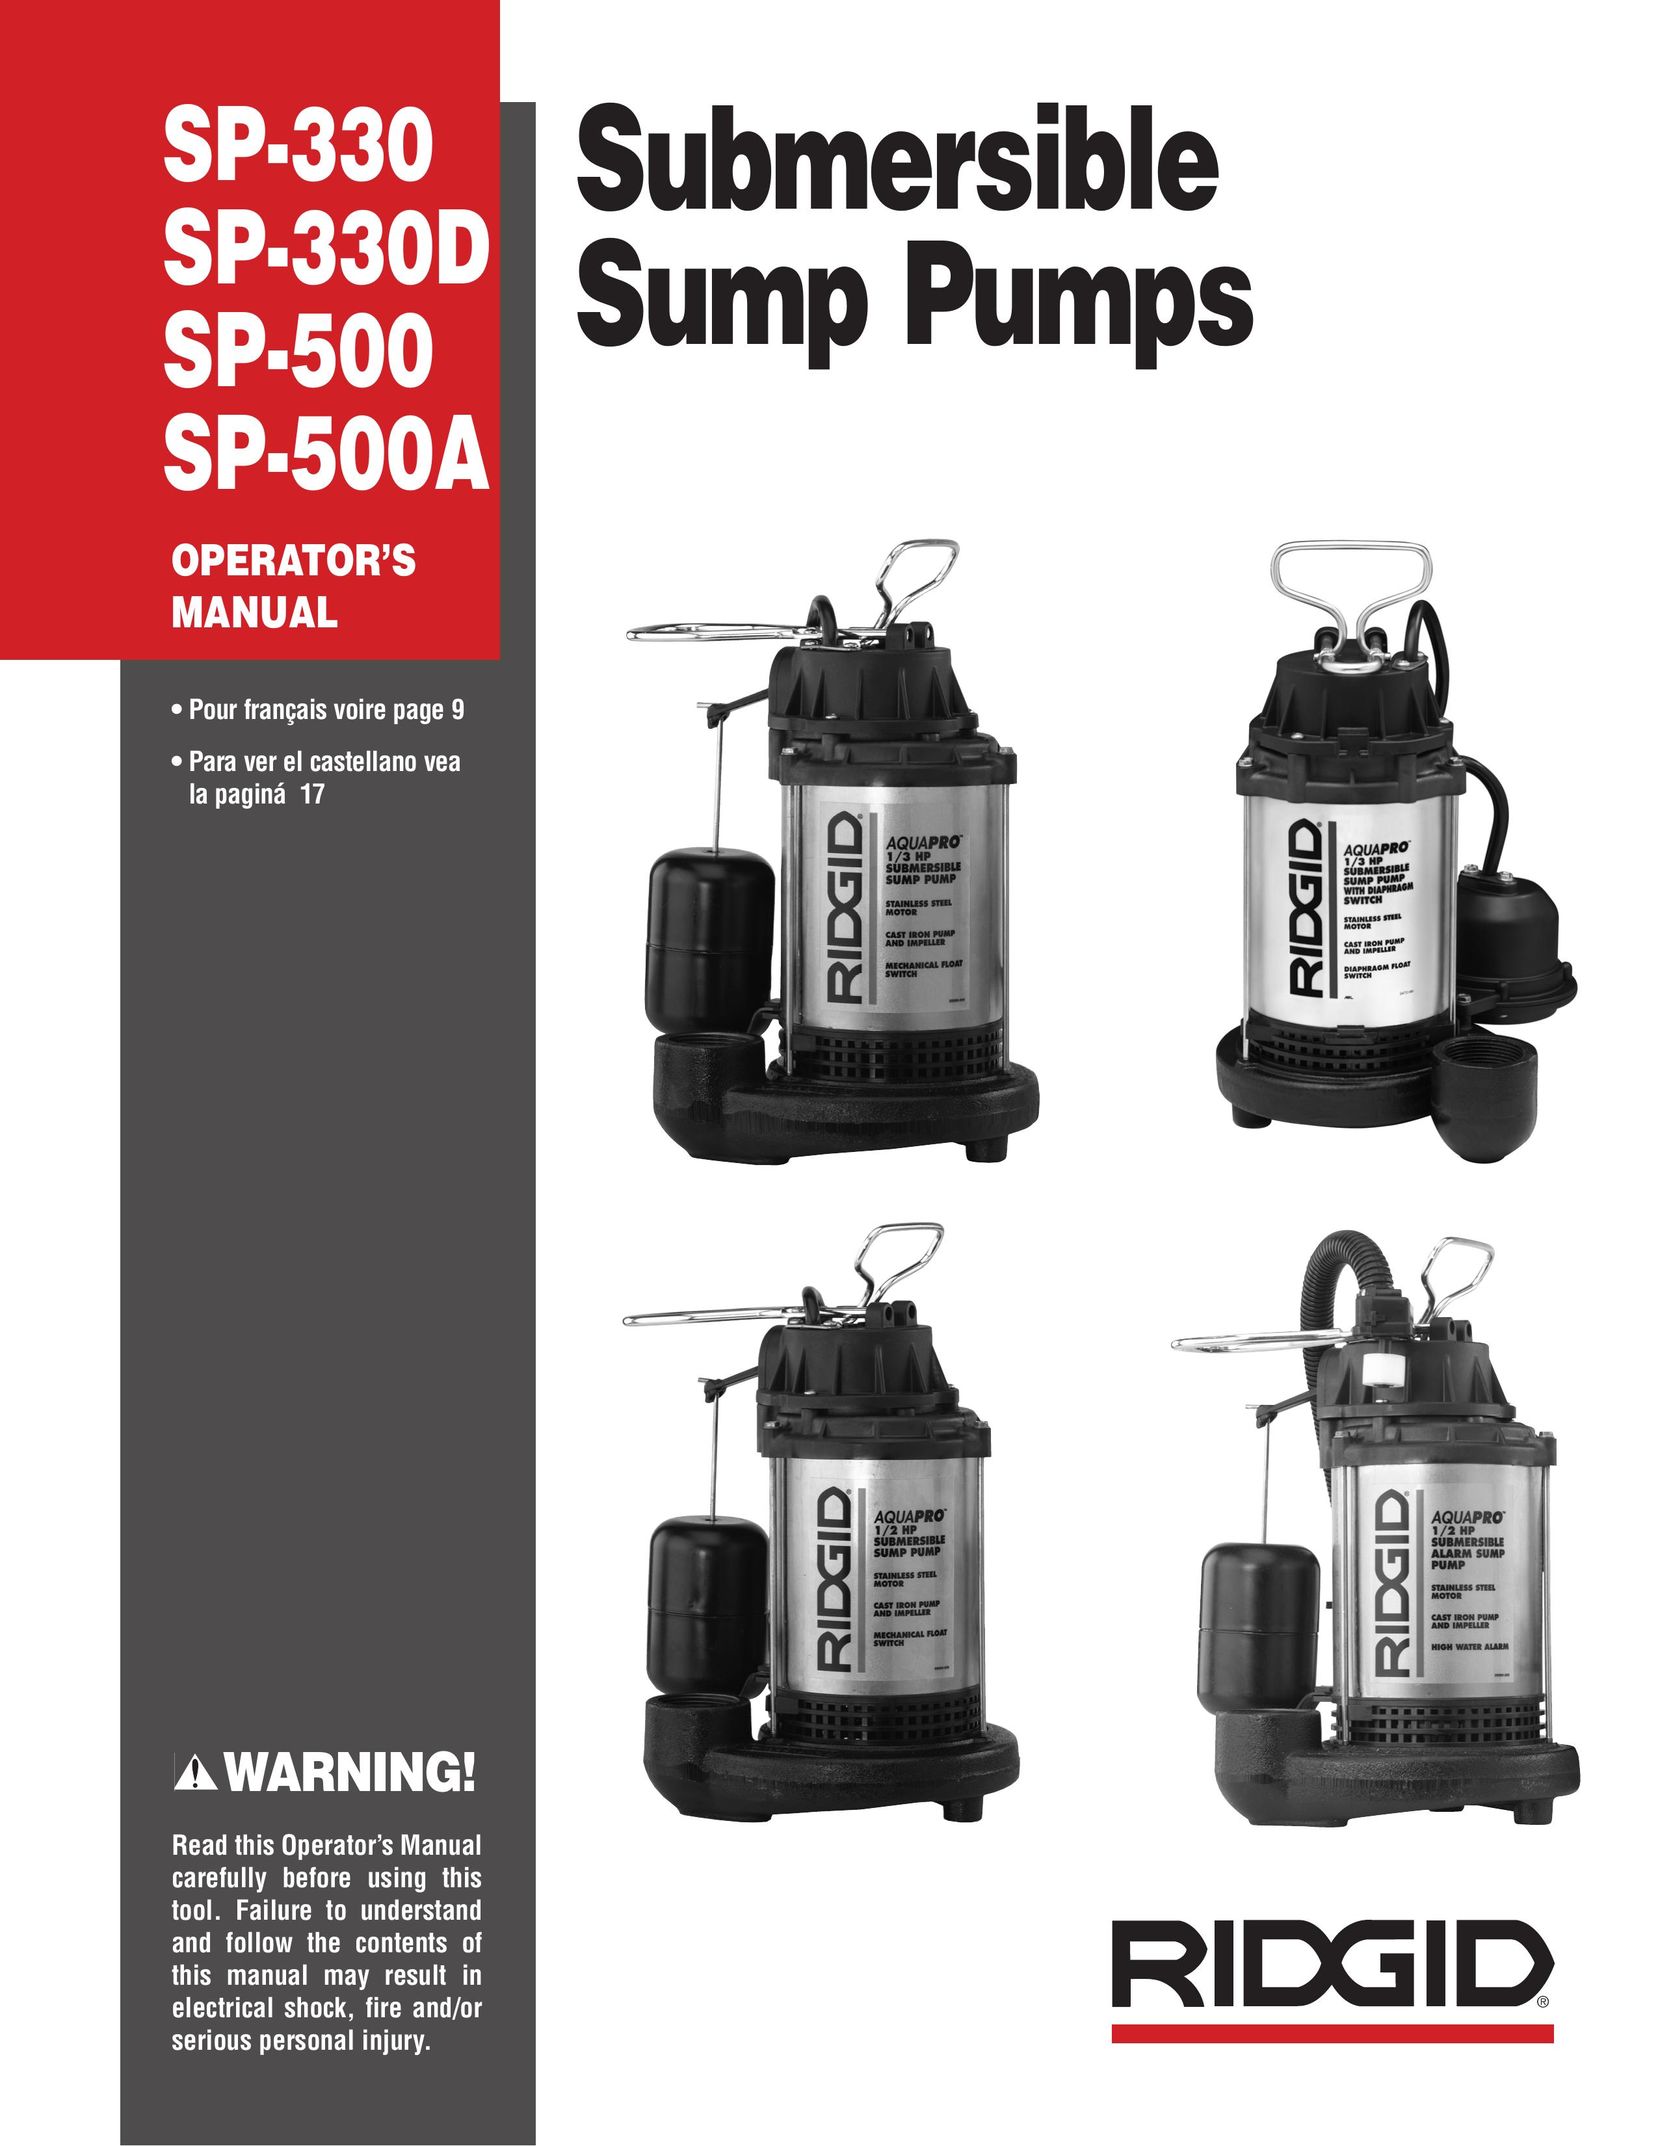 RIDGID SP-330D Water Pump User Manual